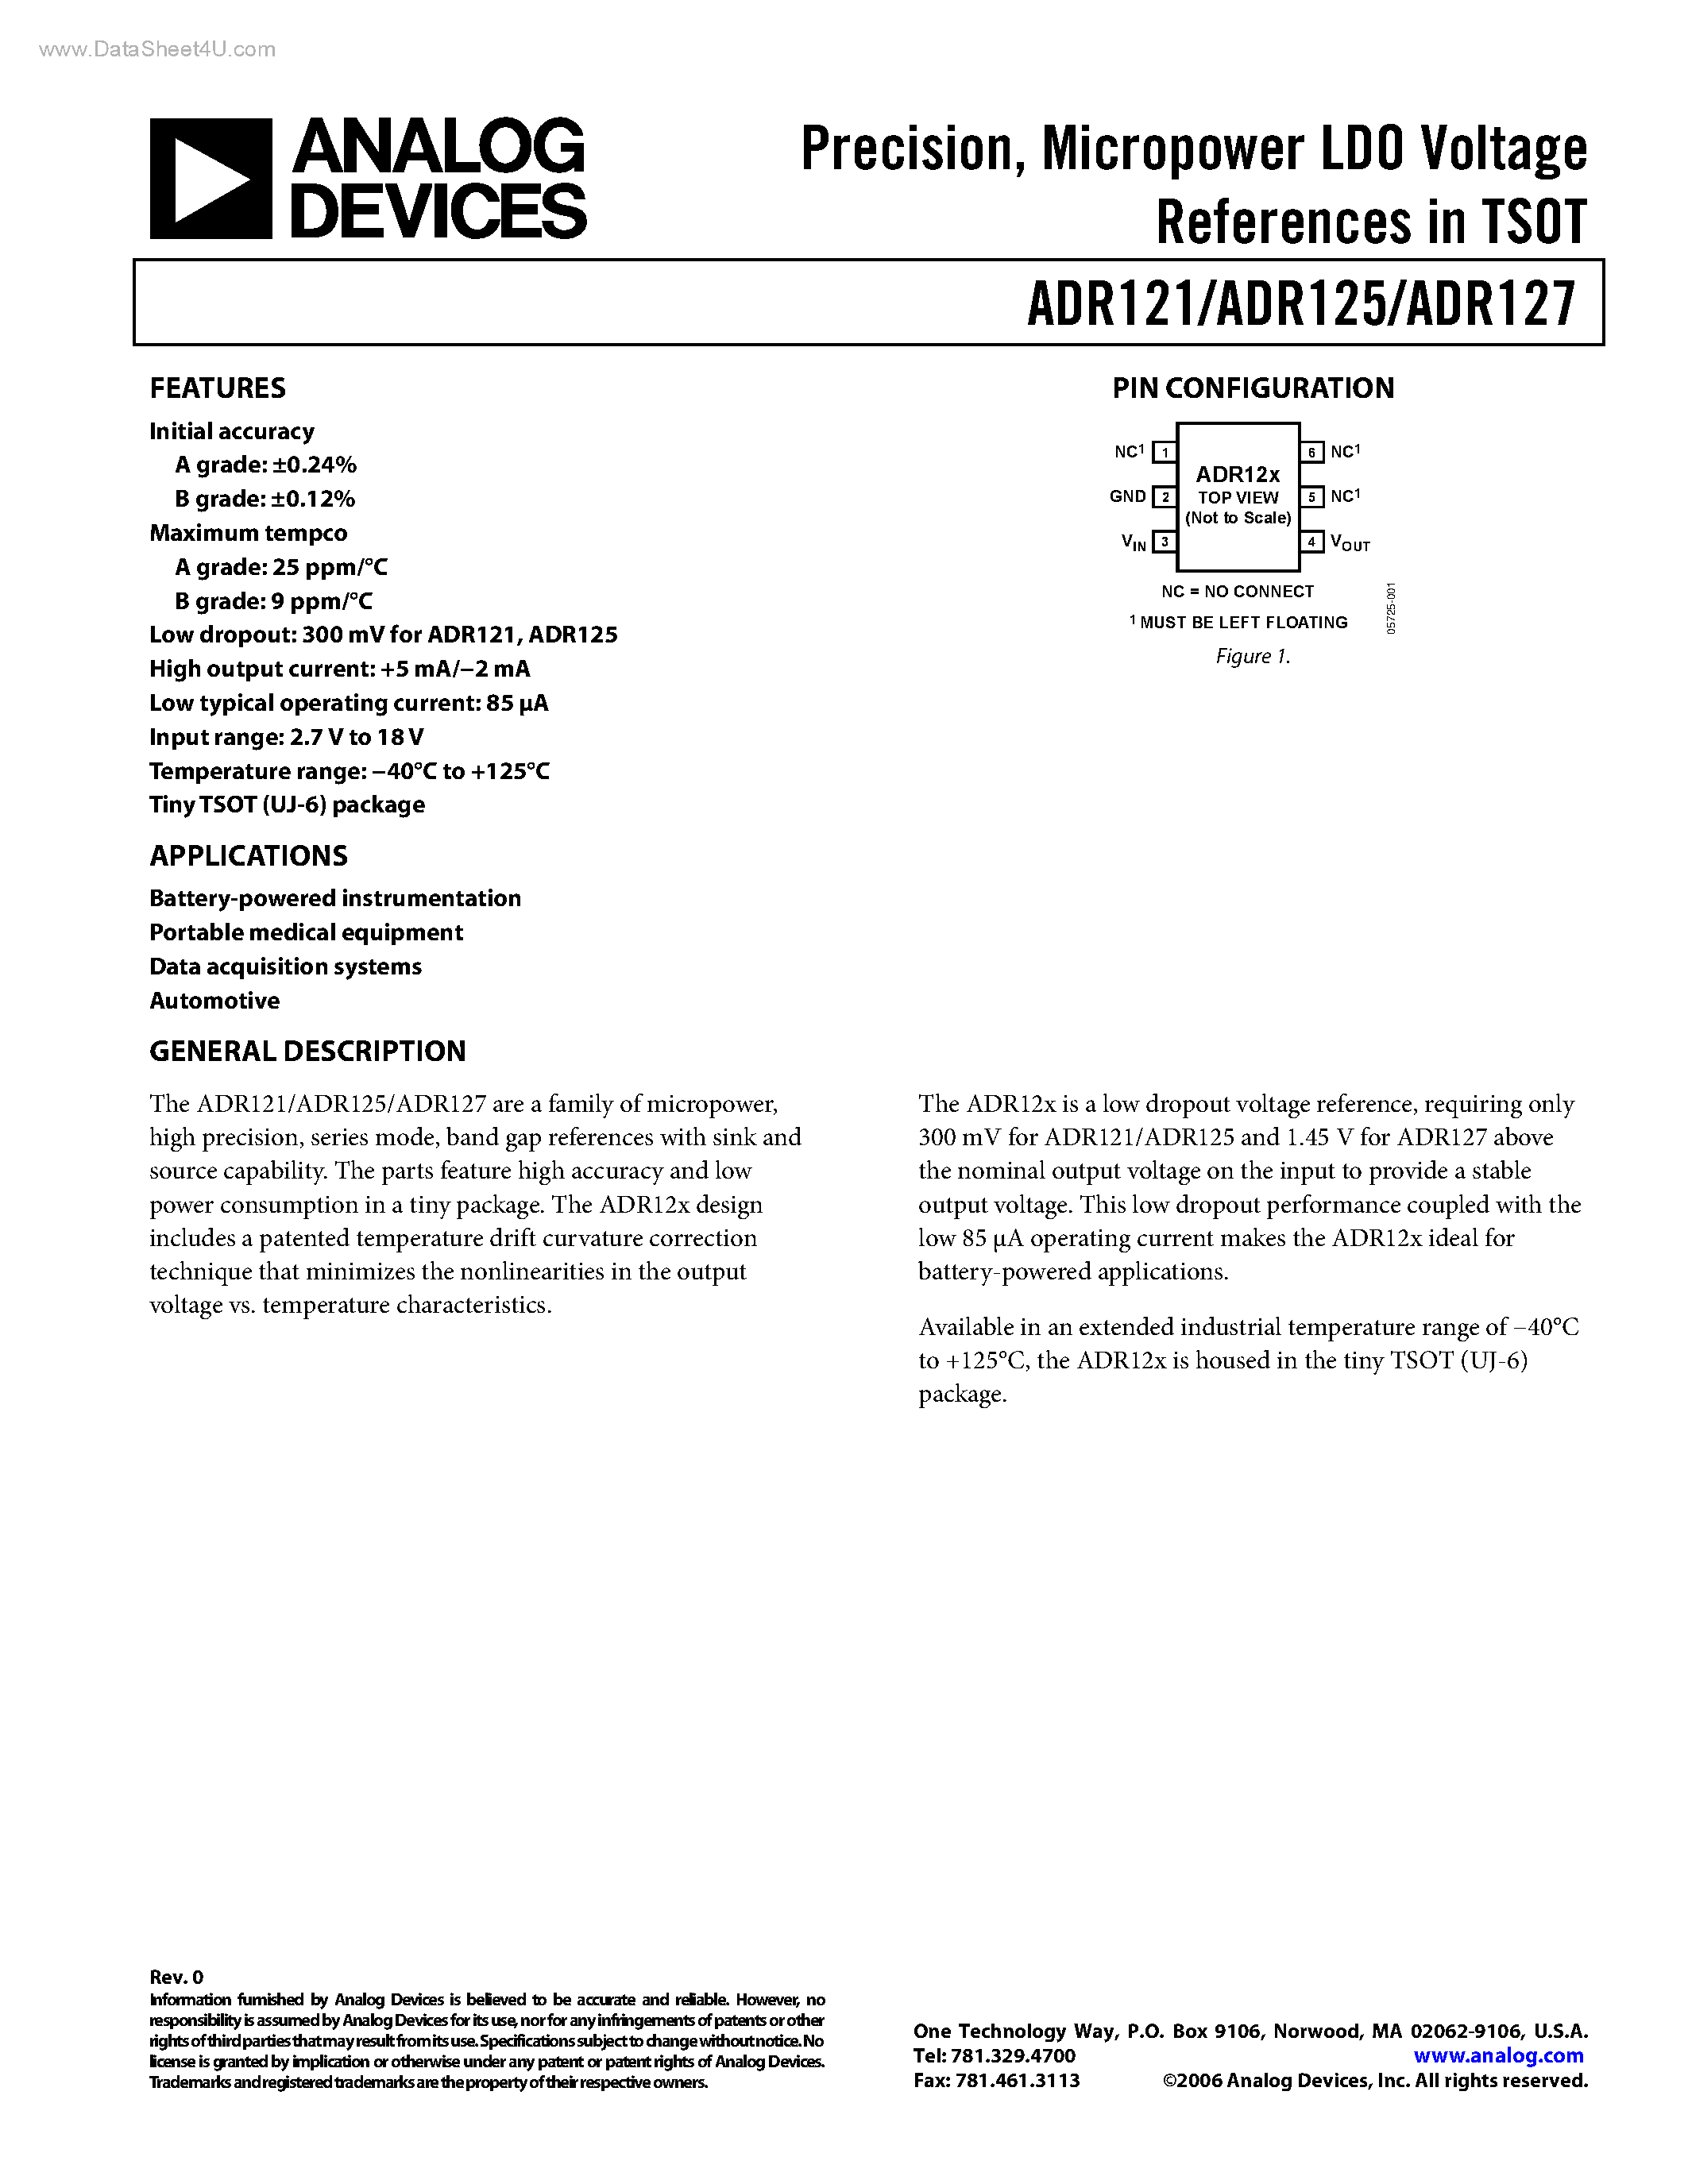 Даташит ADR121 - (ADR121 - ADR127) Micropower LDO Voltage References страница 1